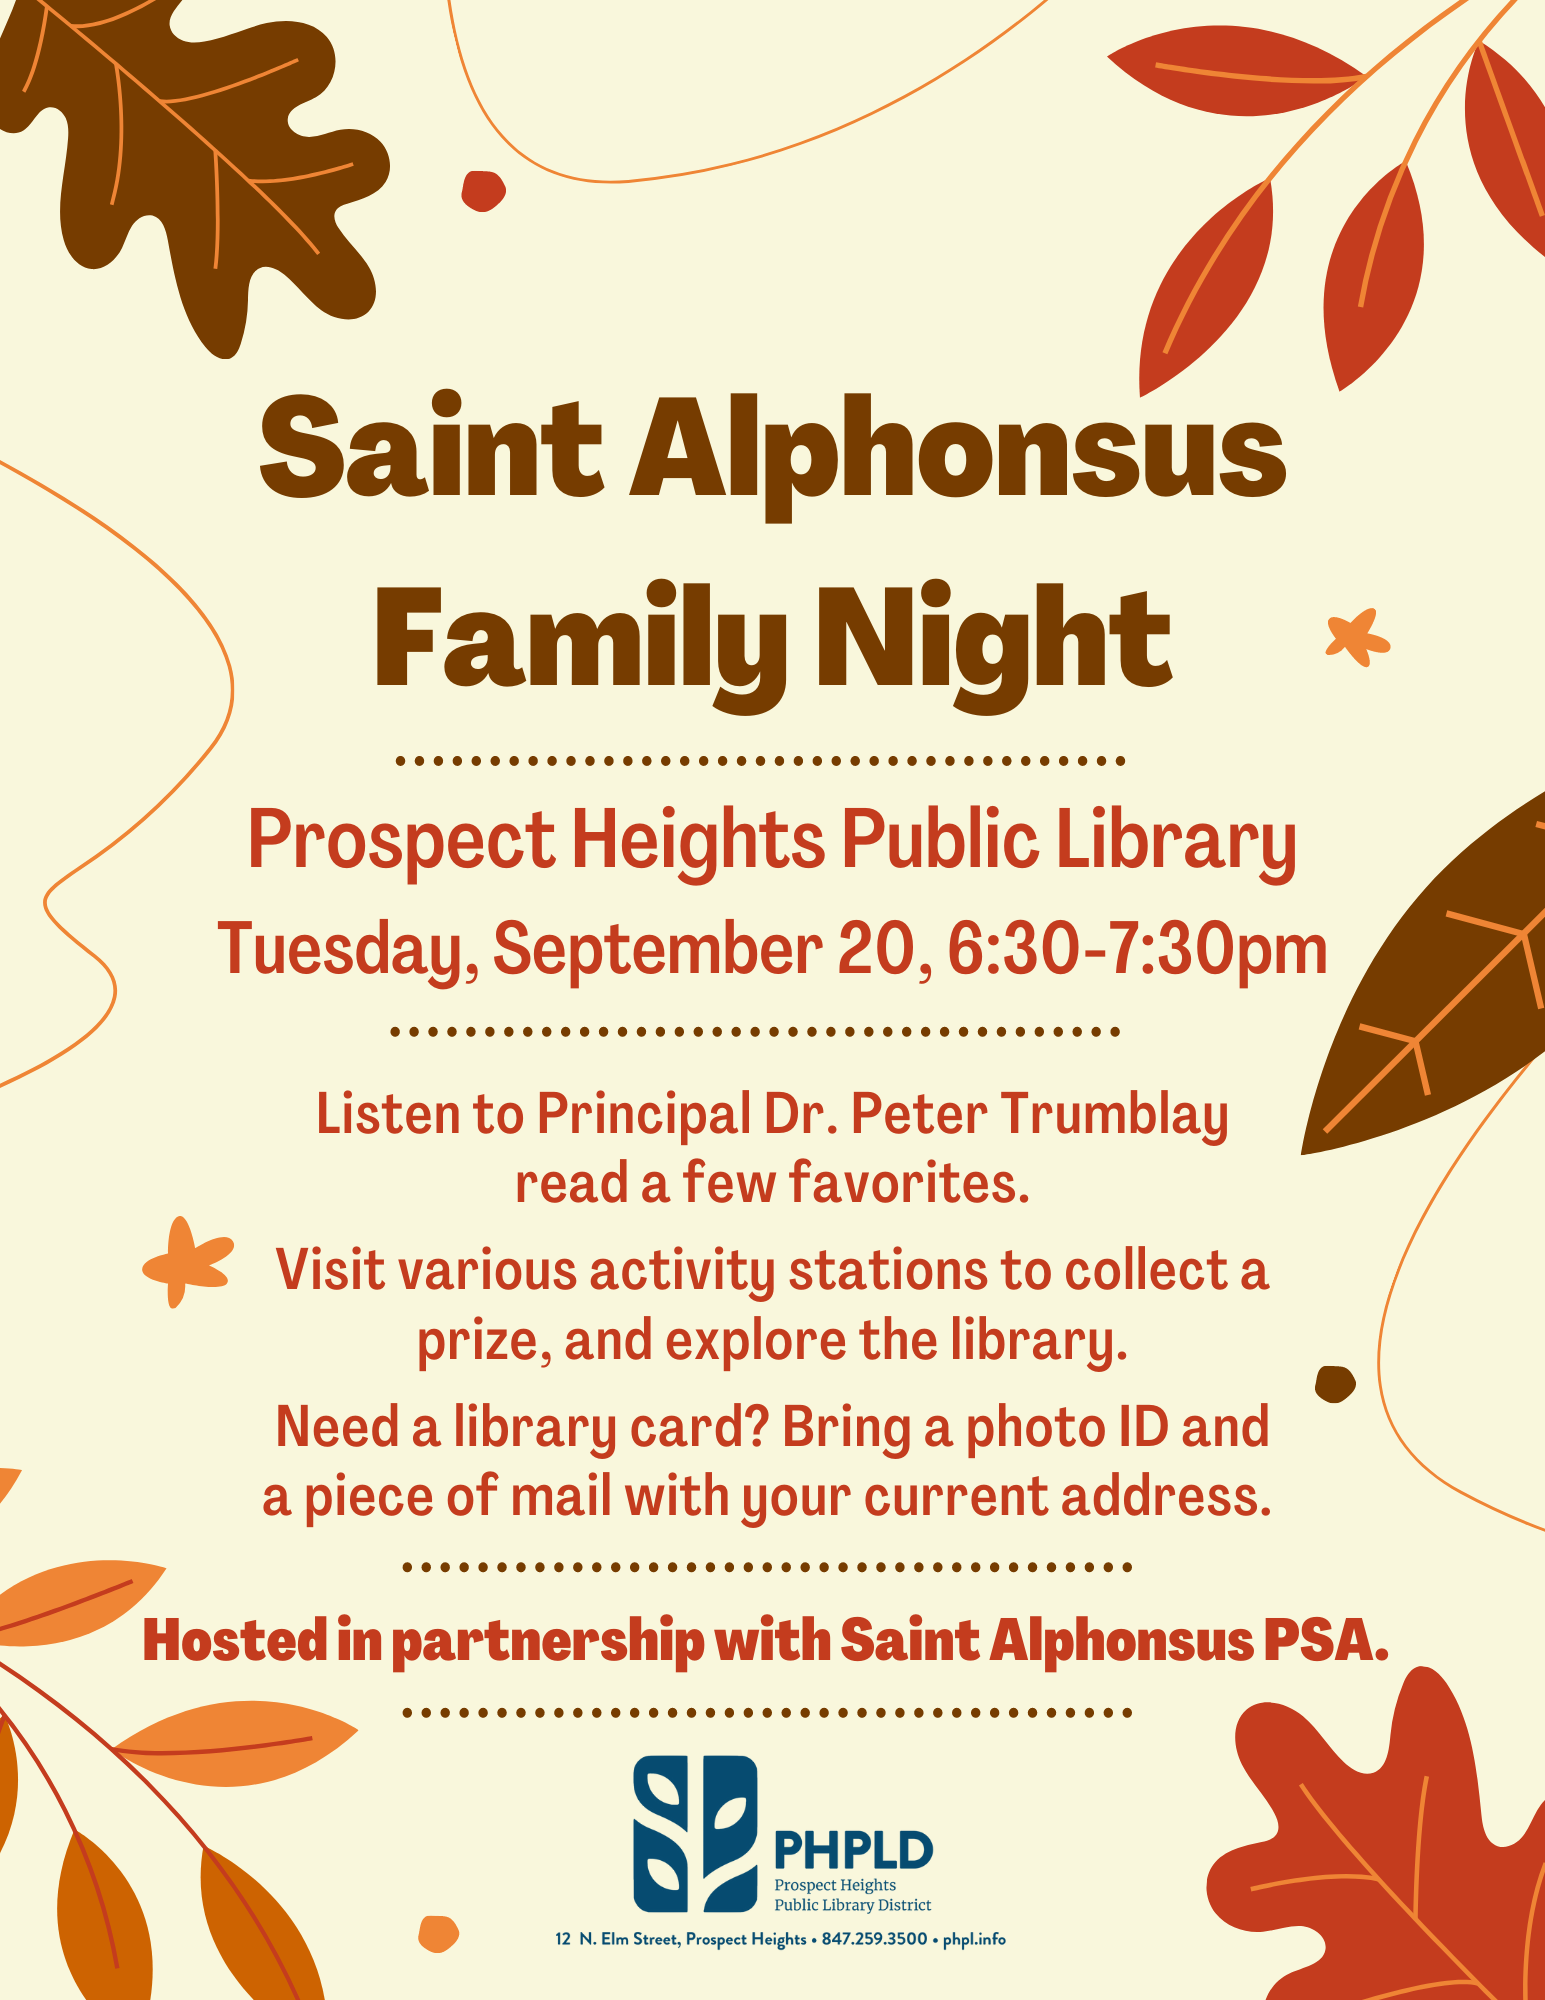 Saint Alphonsus Family Night